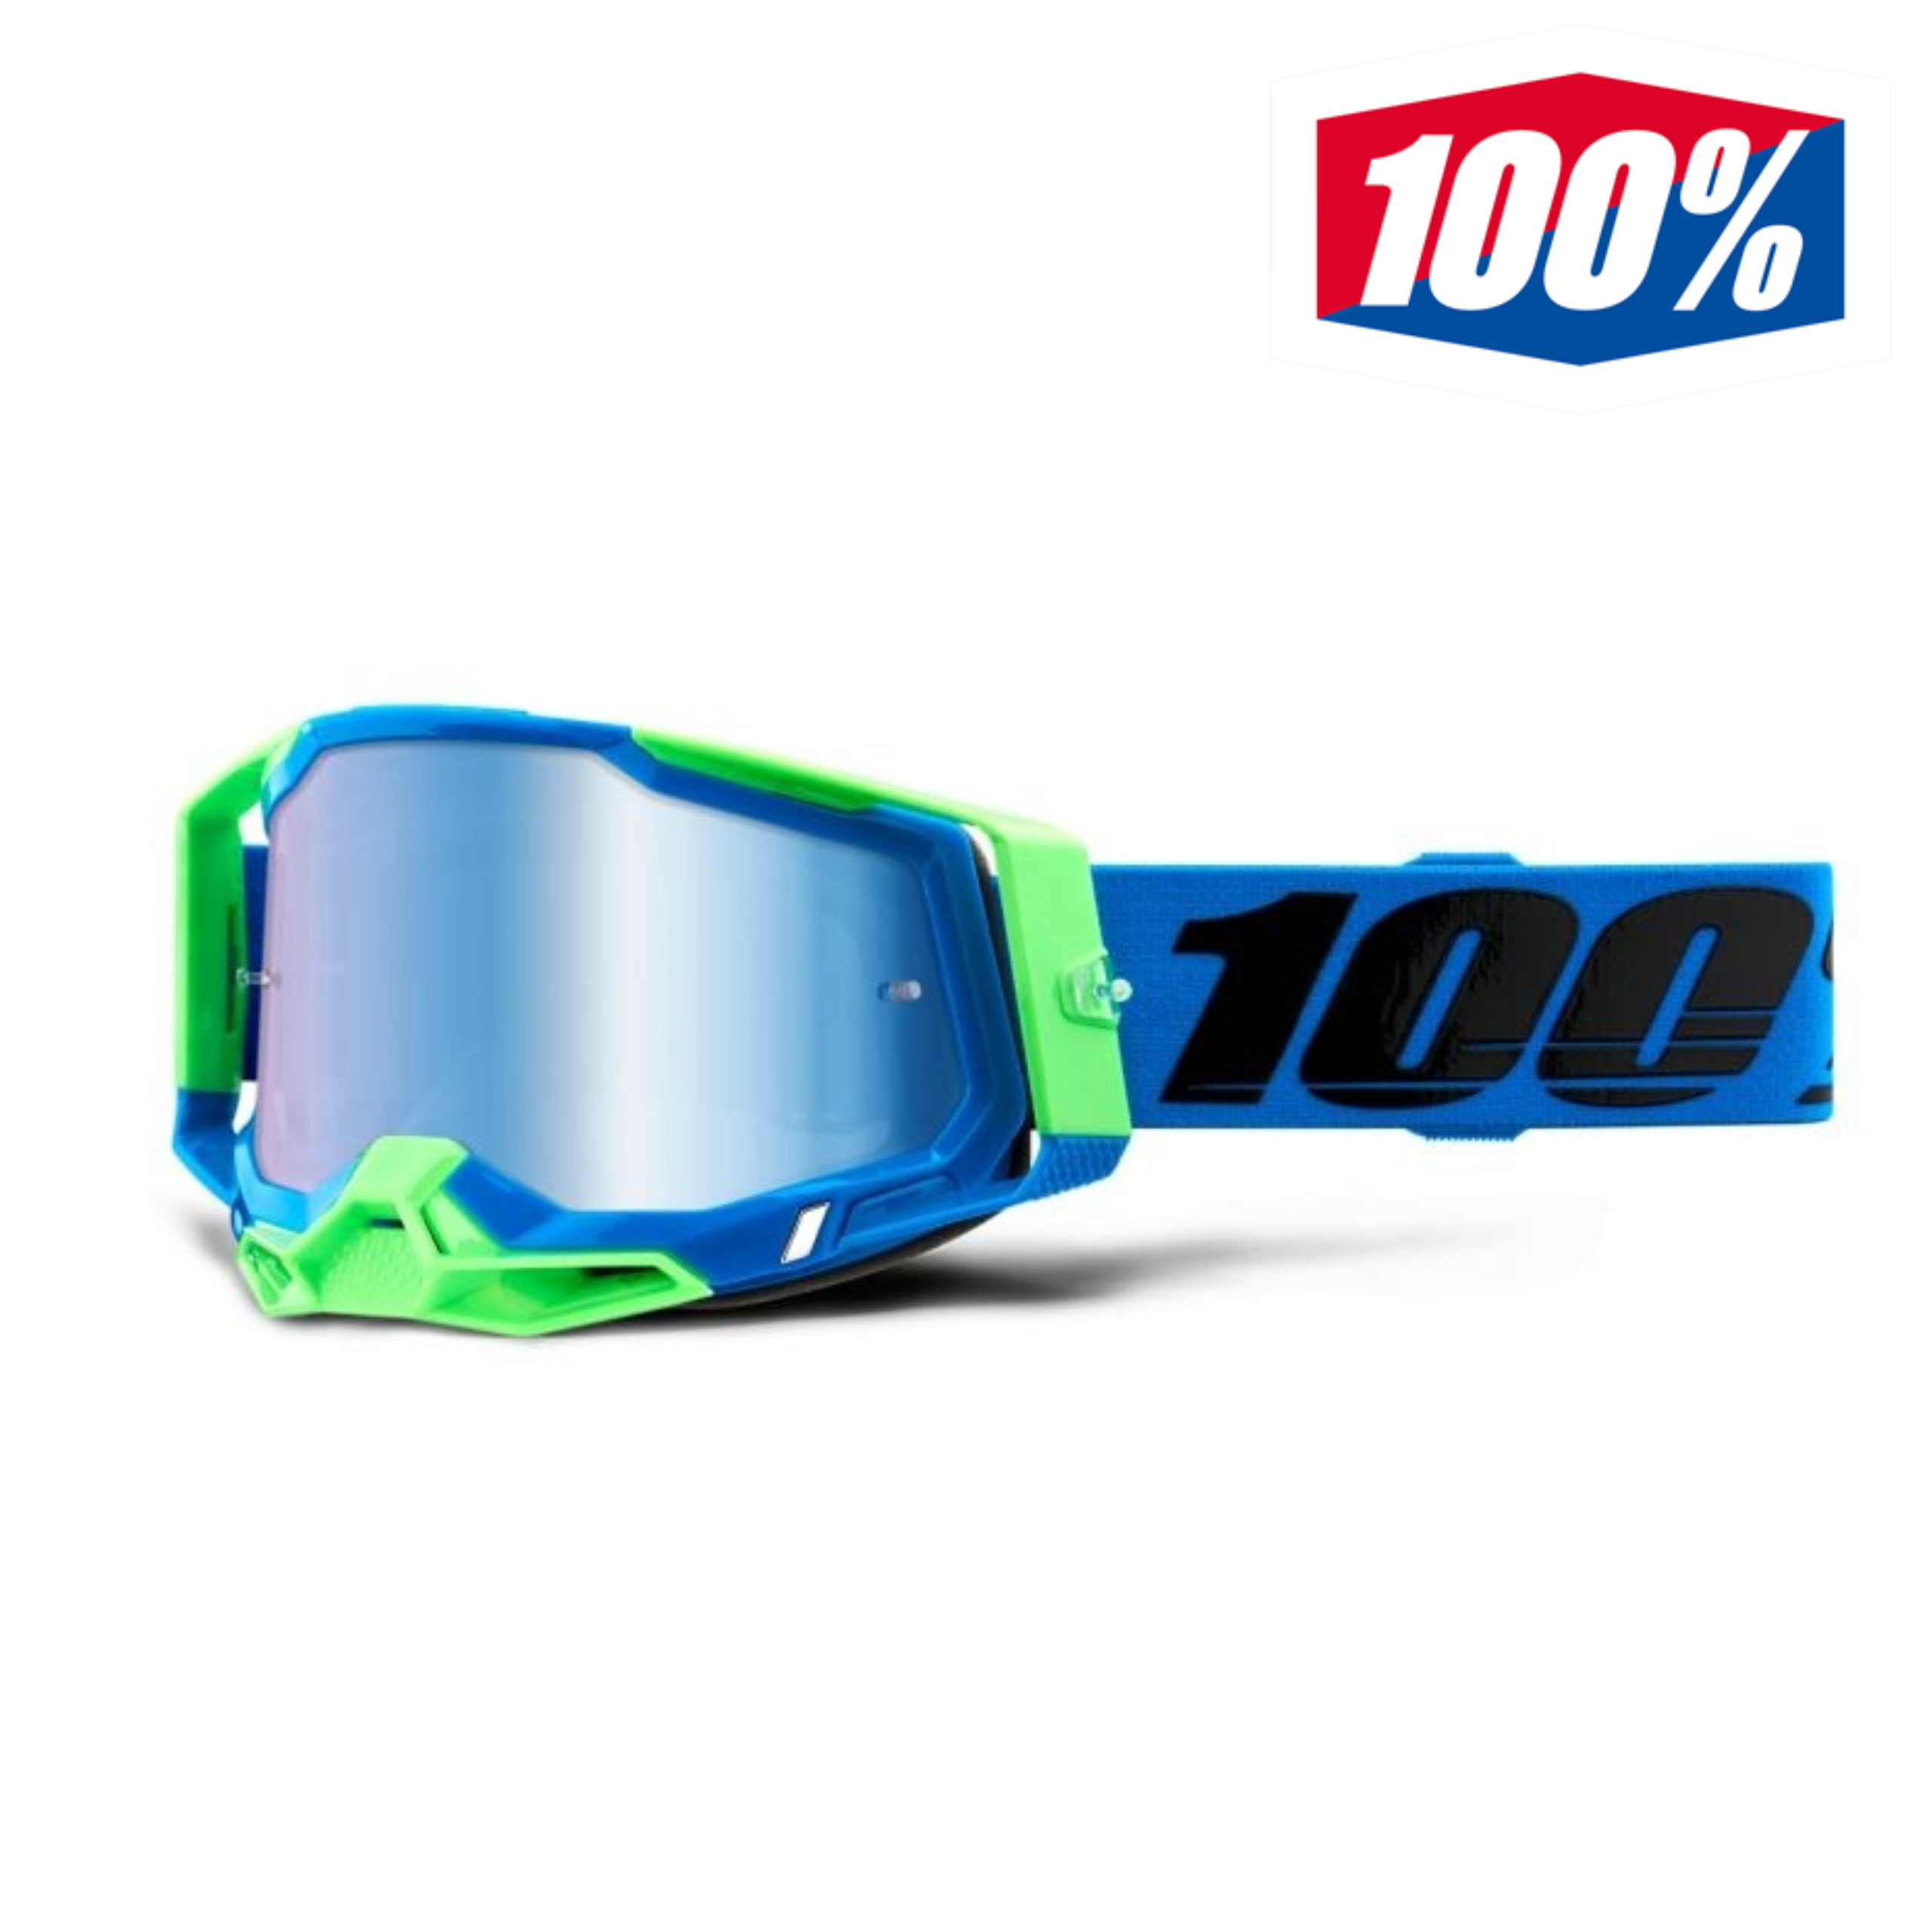 100 Racecraft 2 Goggles